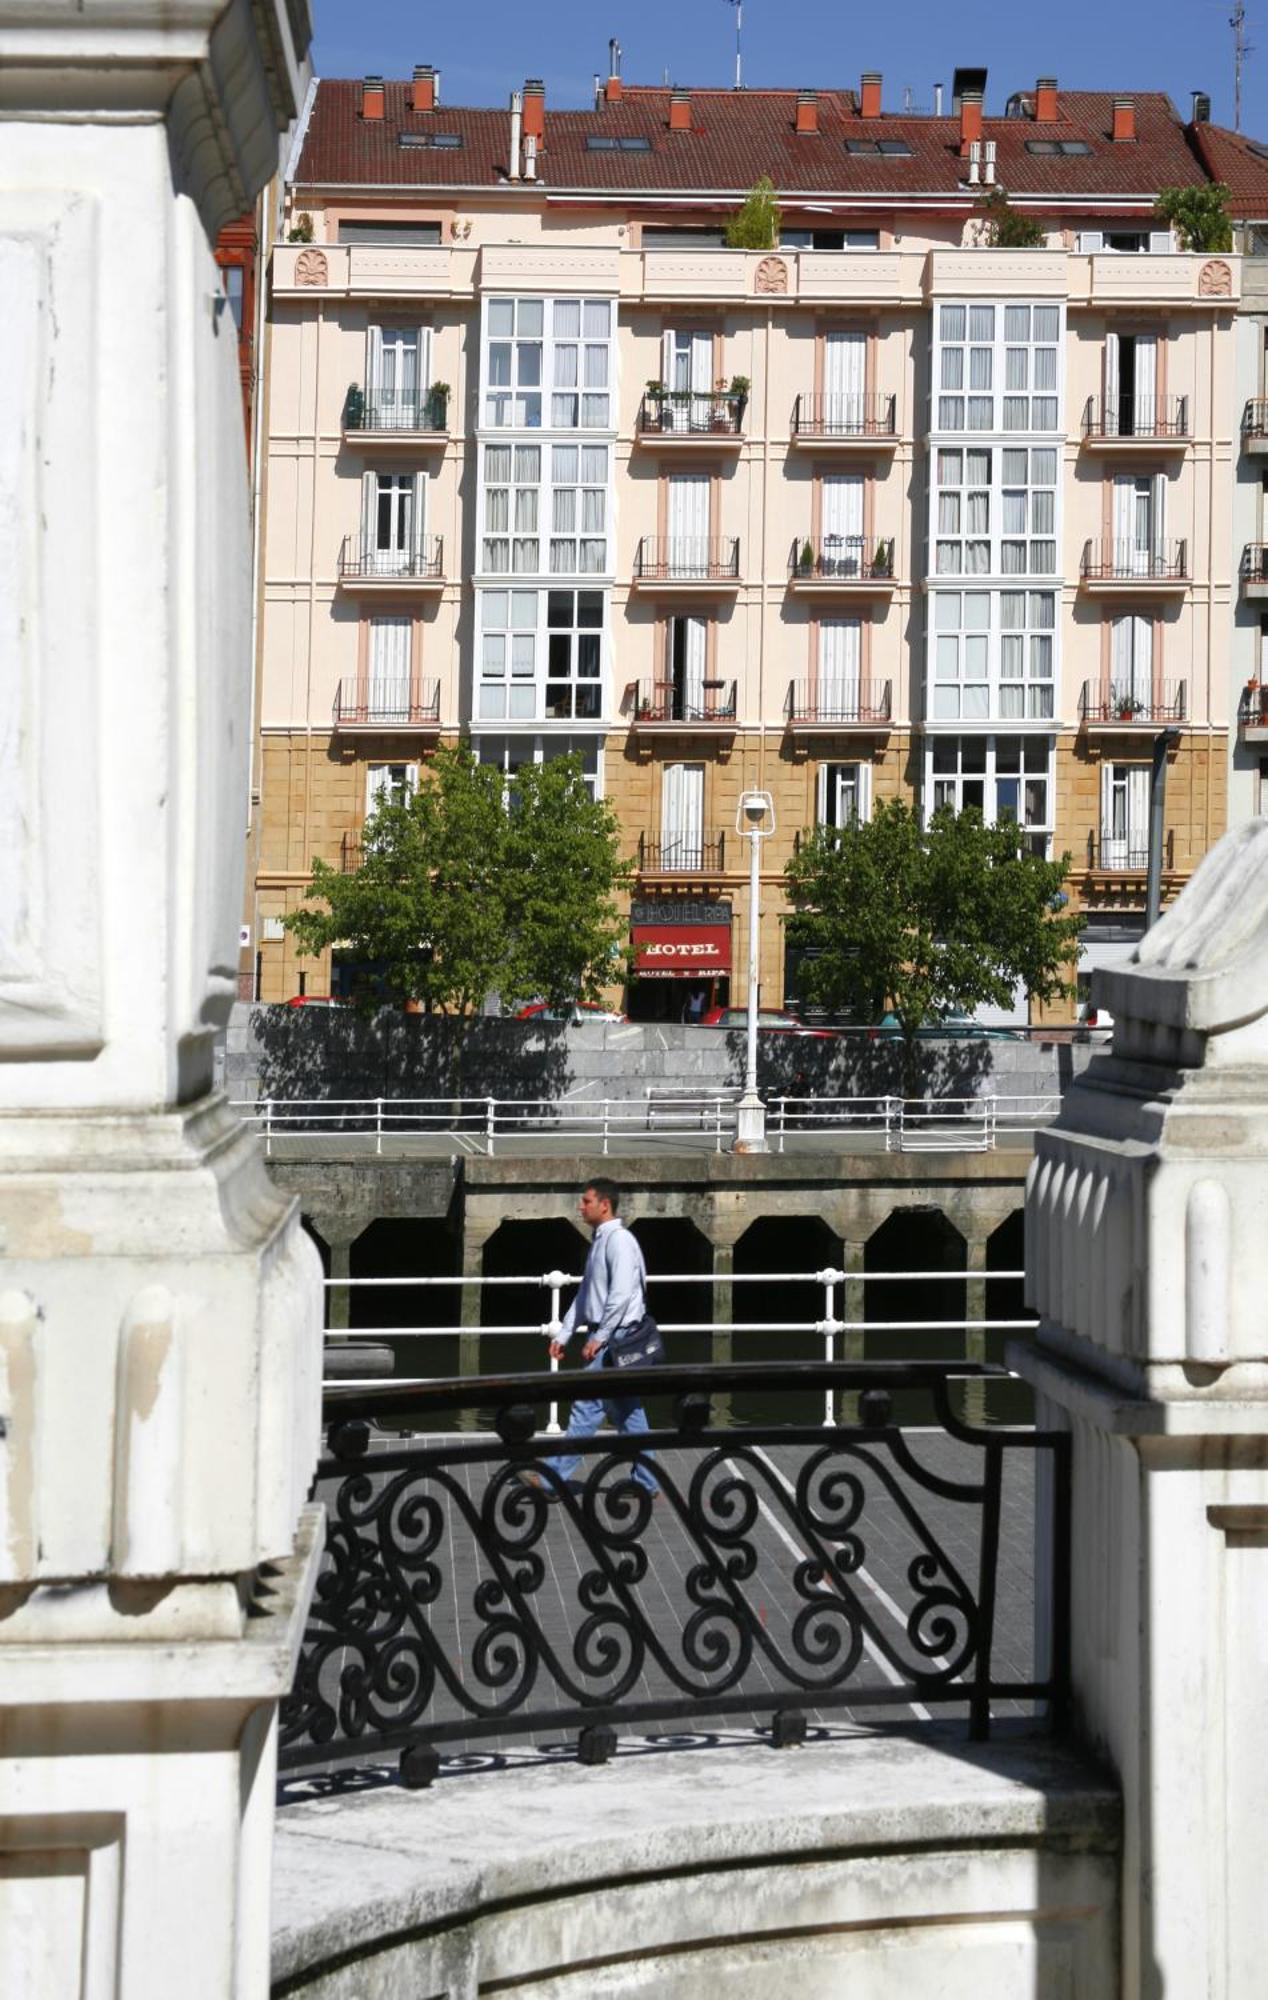 Hotel Ripa Bilbao Exterior foto